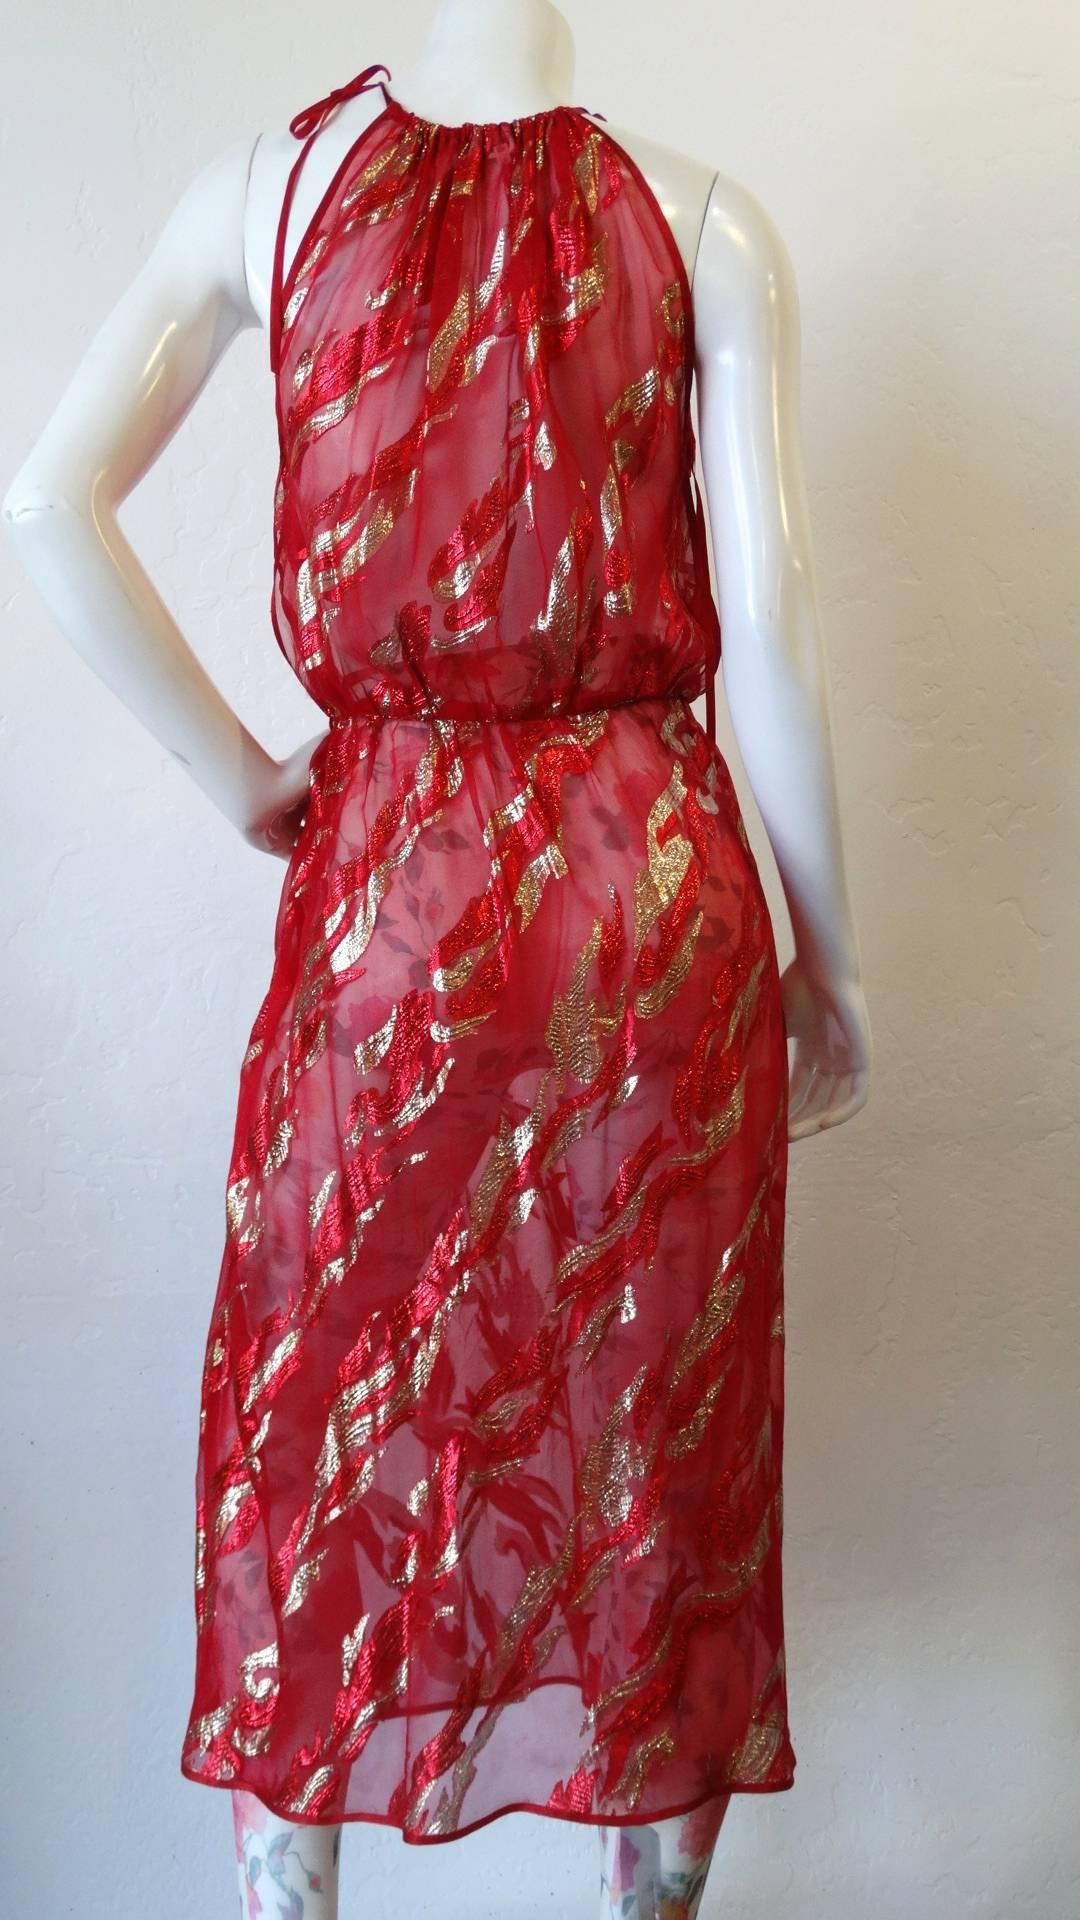 Saint Laurent Rive Gauche Red Sheer Printed Halter Dress, 1980s  5